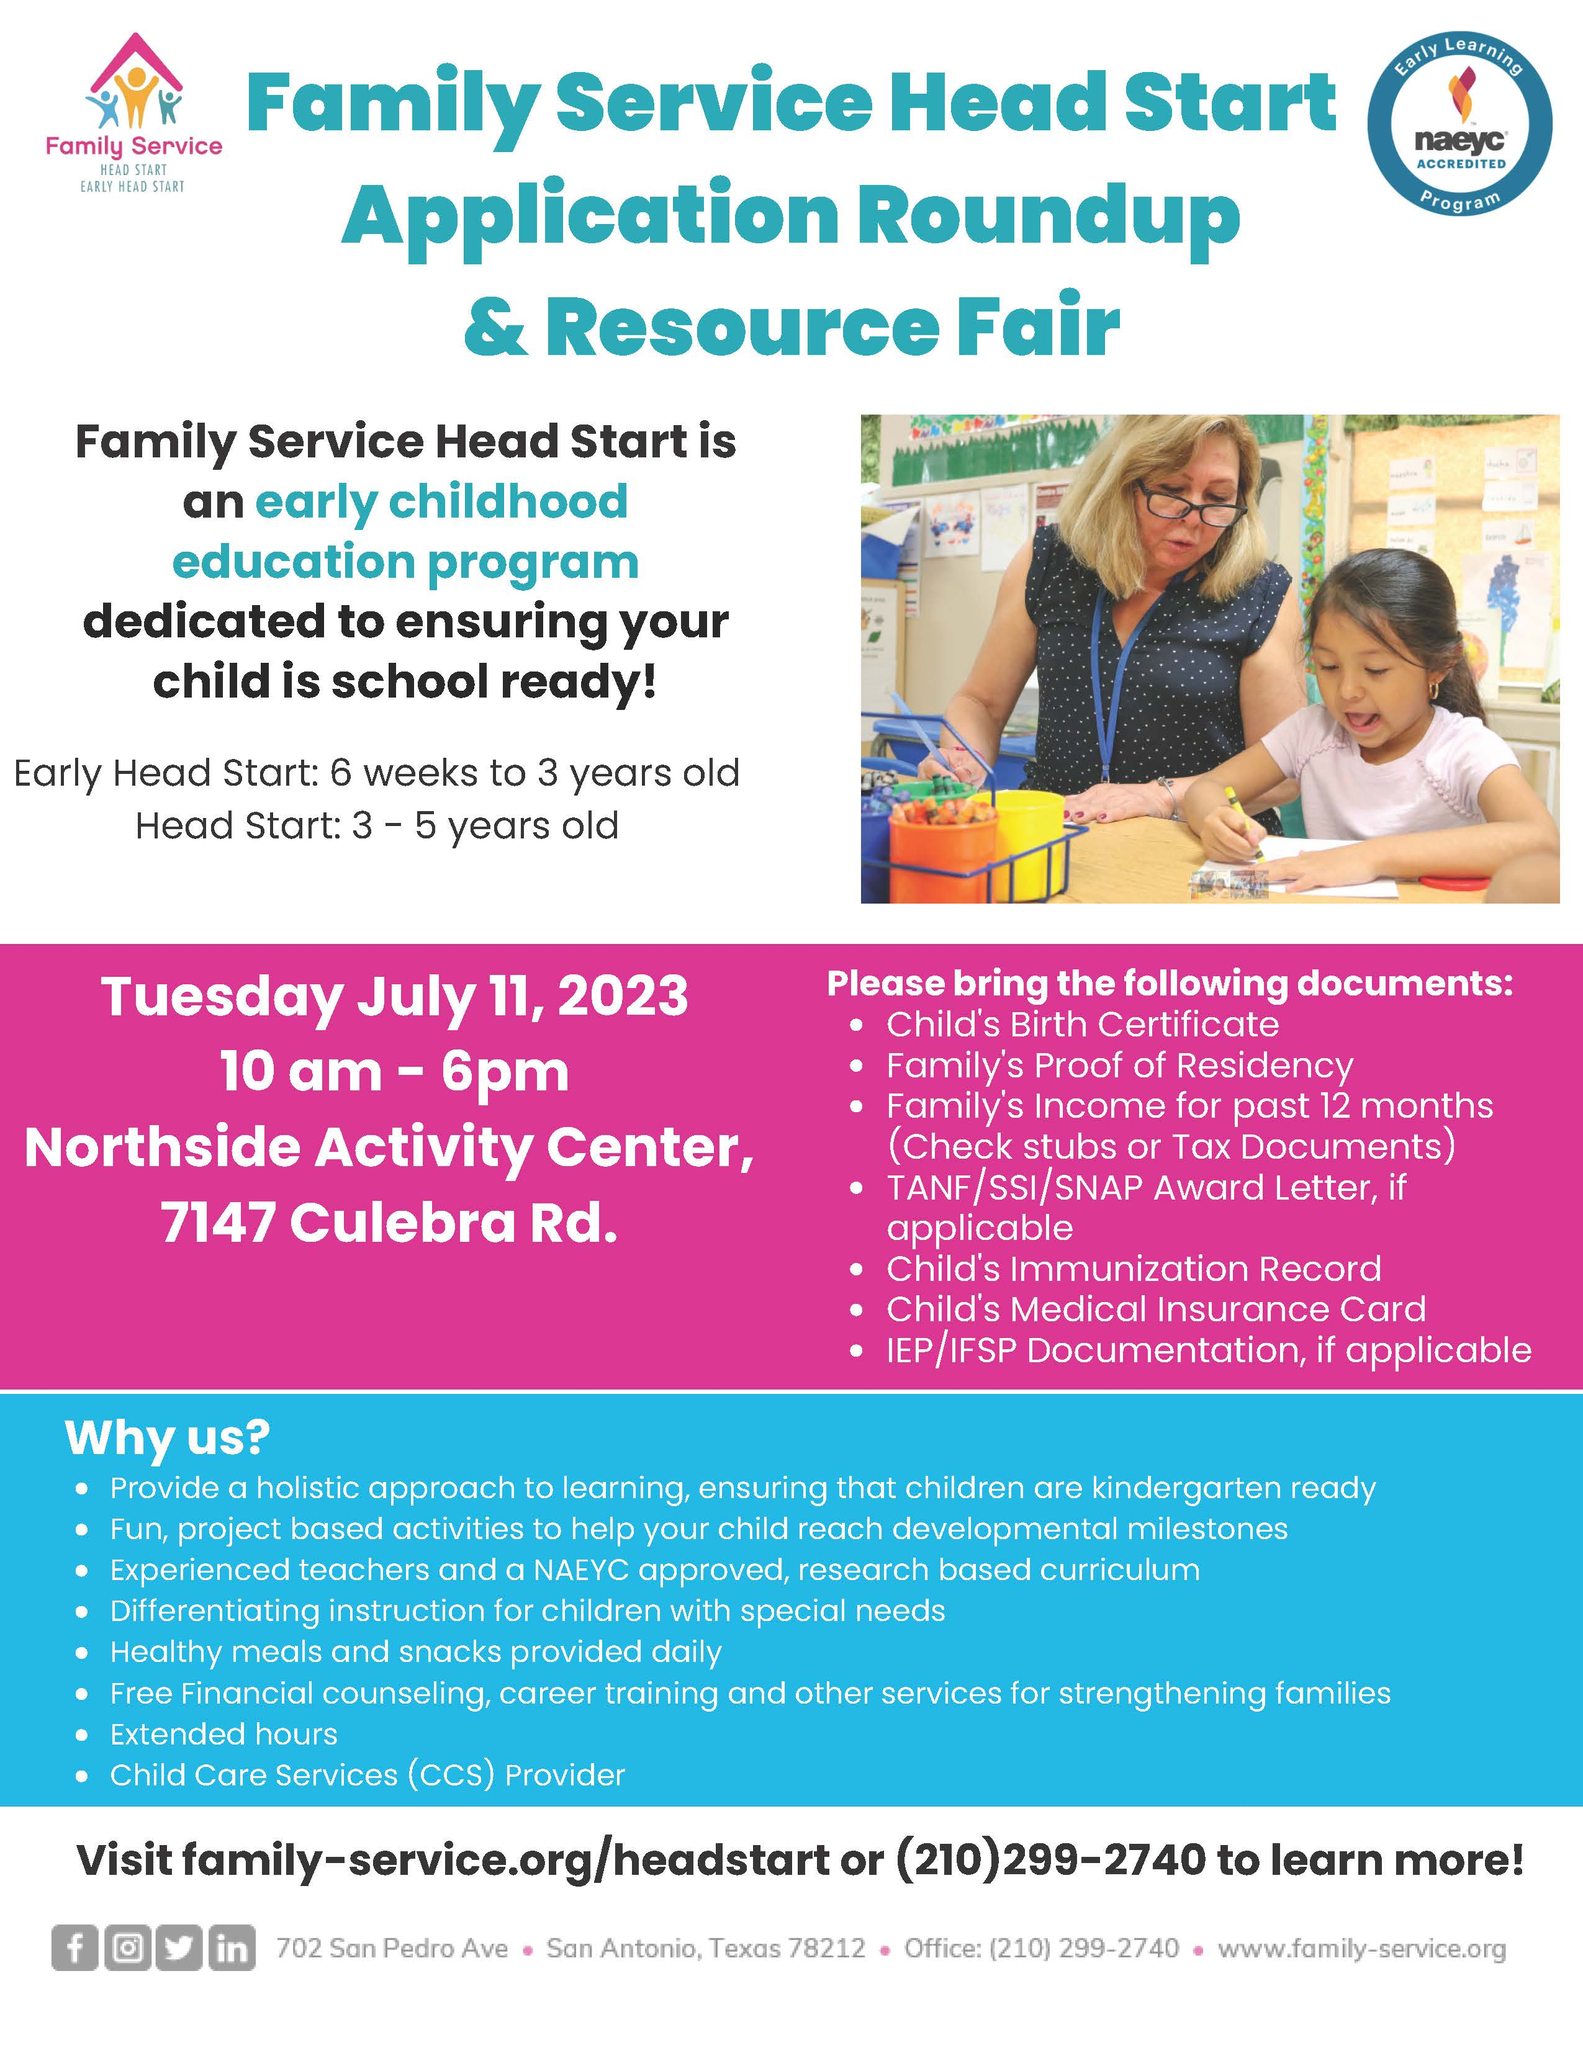 Family Service Head Start Application Roundup & Resource Fair